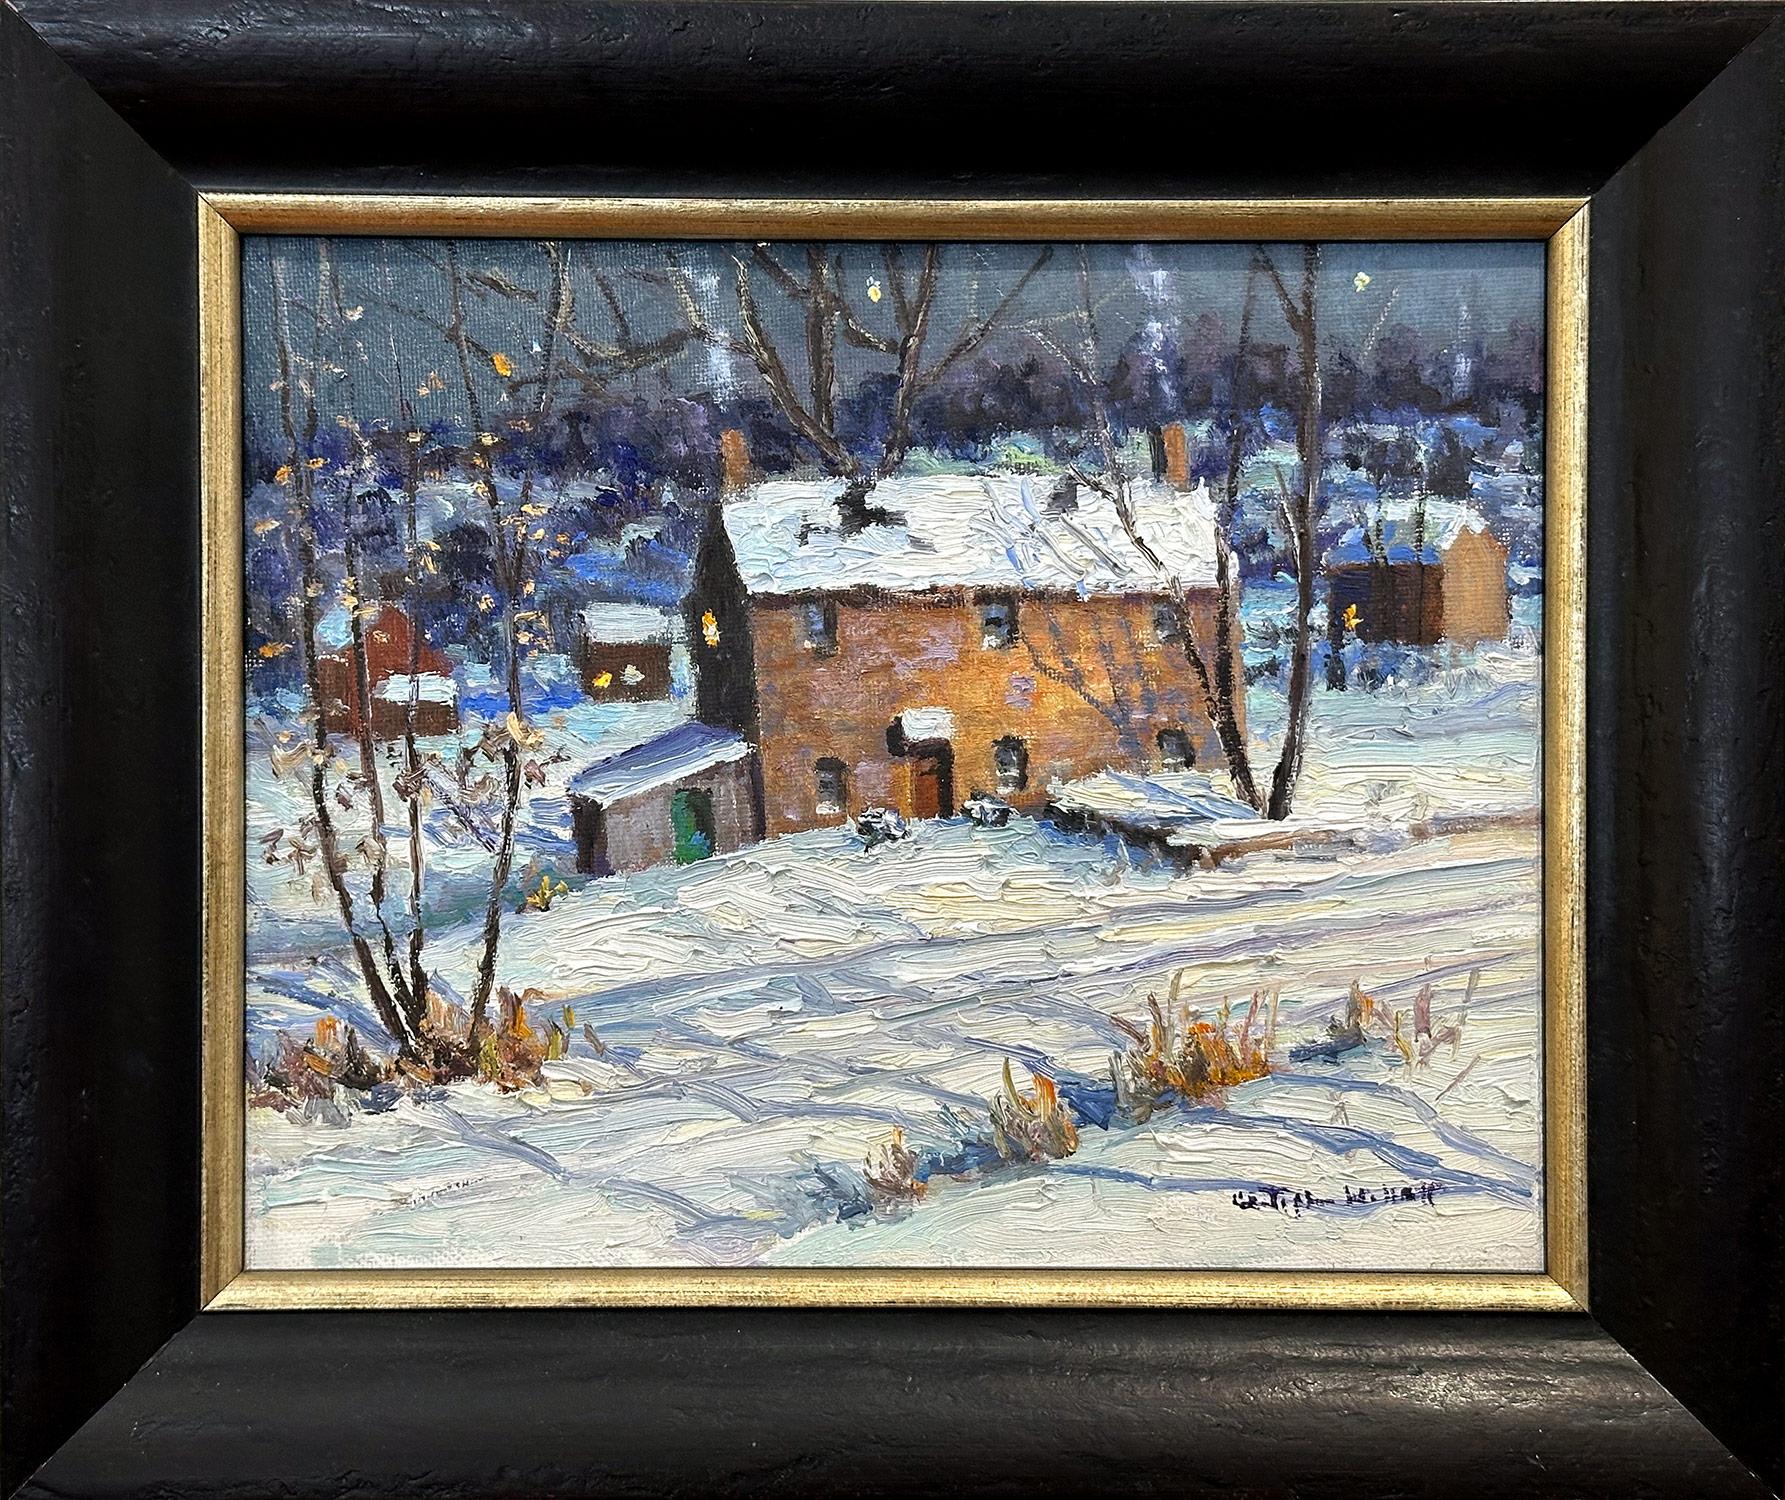 Christopher Willett Landscape Painting - "Winter Solitude" Buckingham PA, Bucks County Snow Scene Landscape Oil Painting 